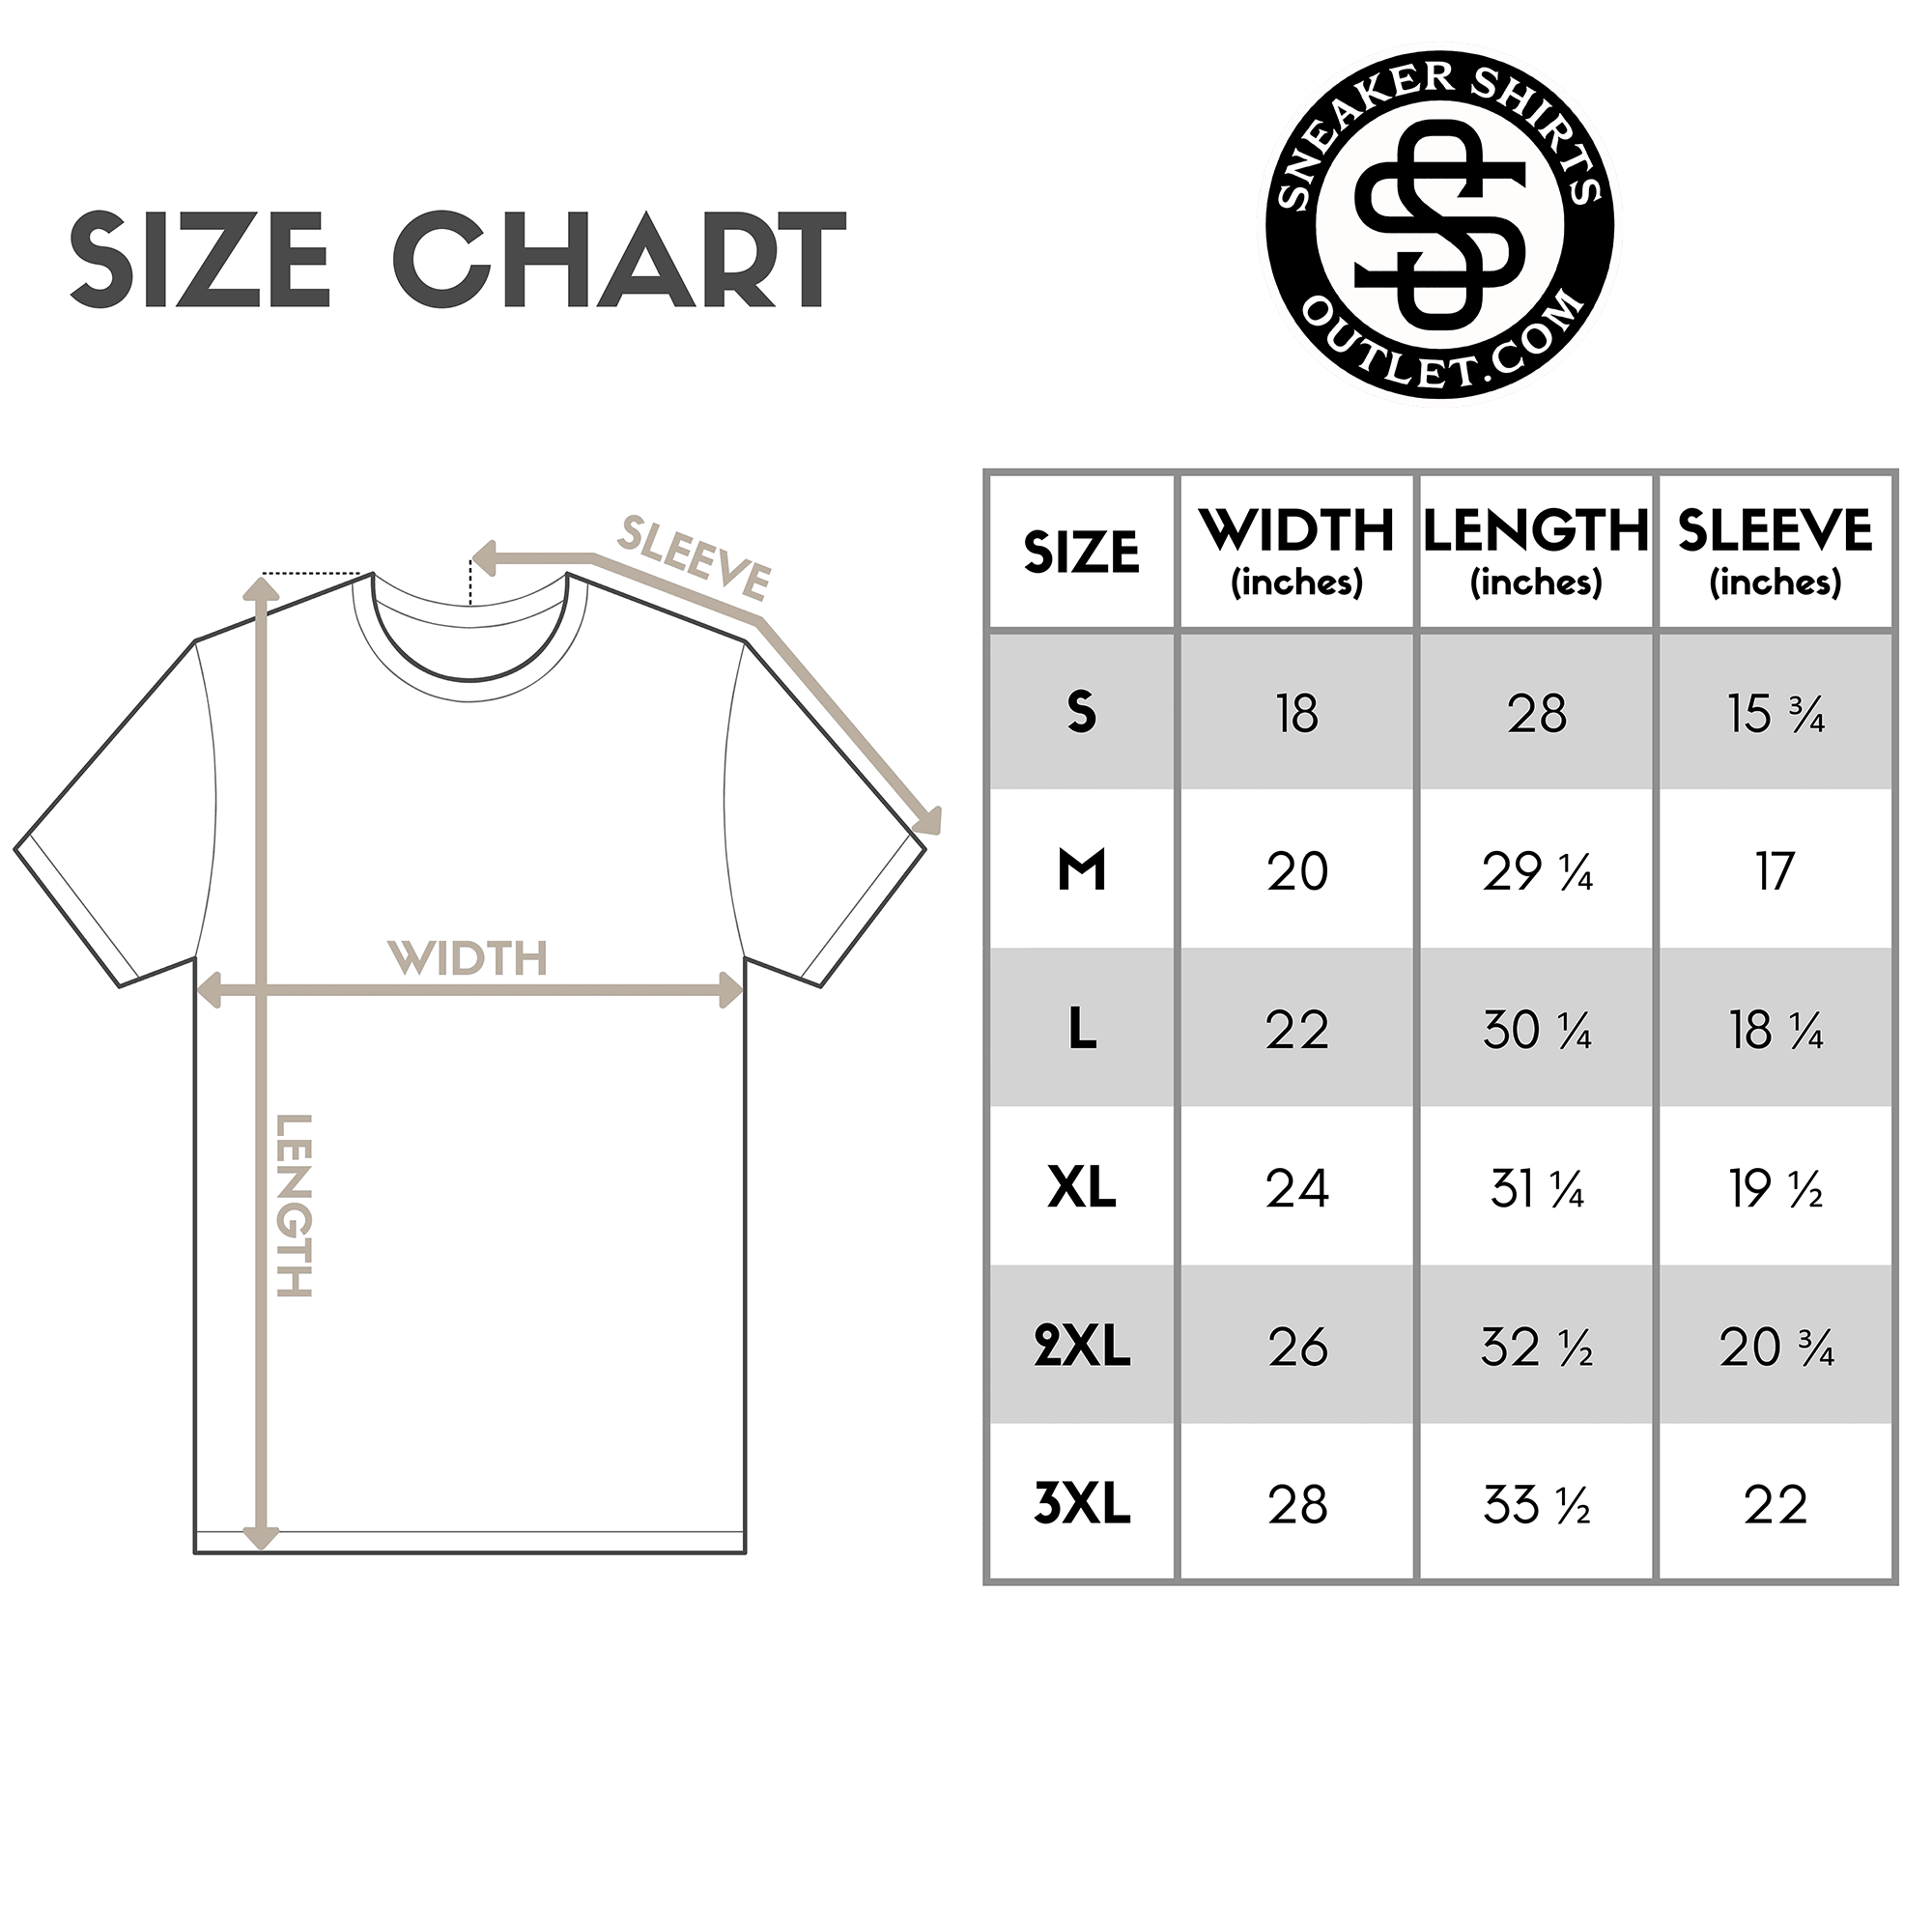 Trap is Life Shirt size chart photo